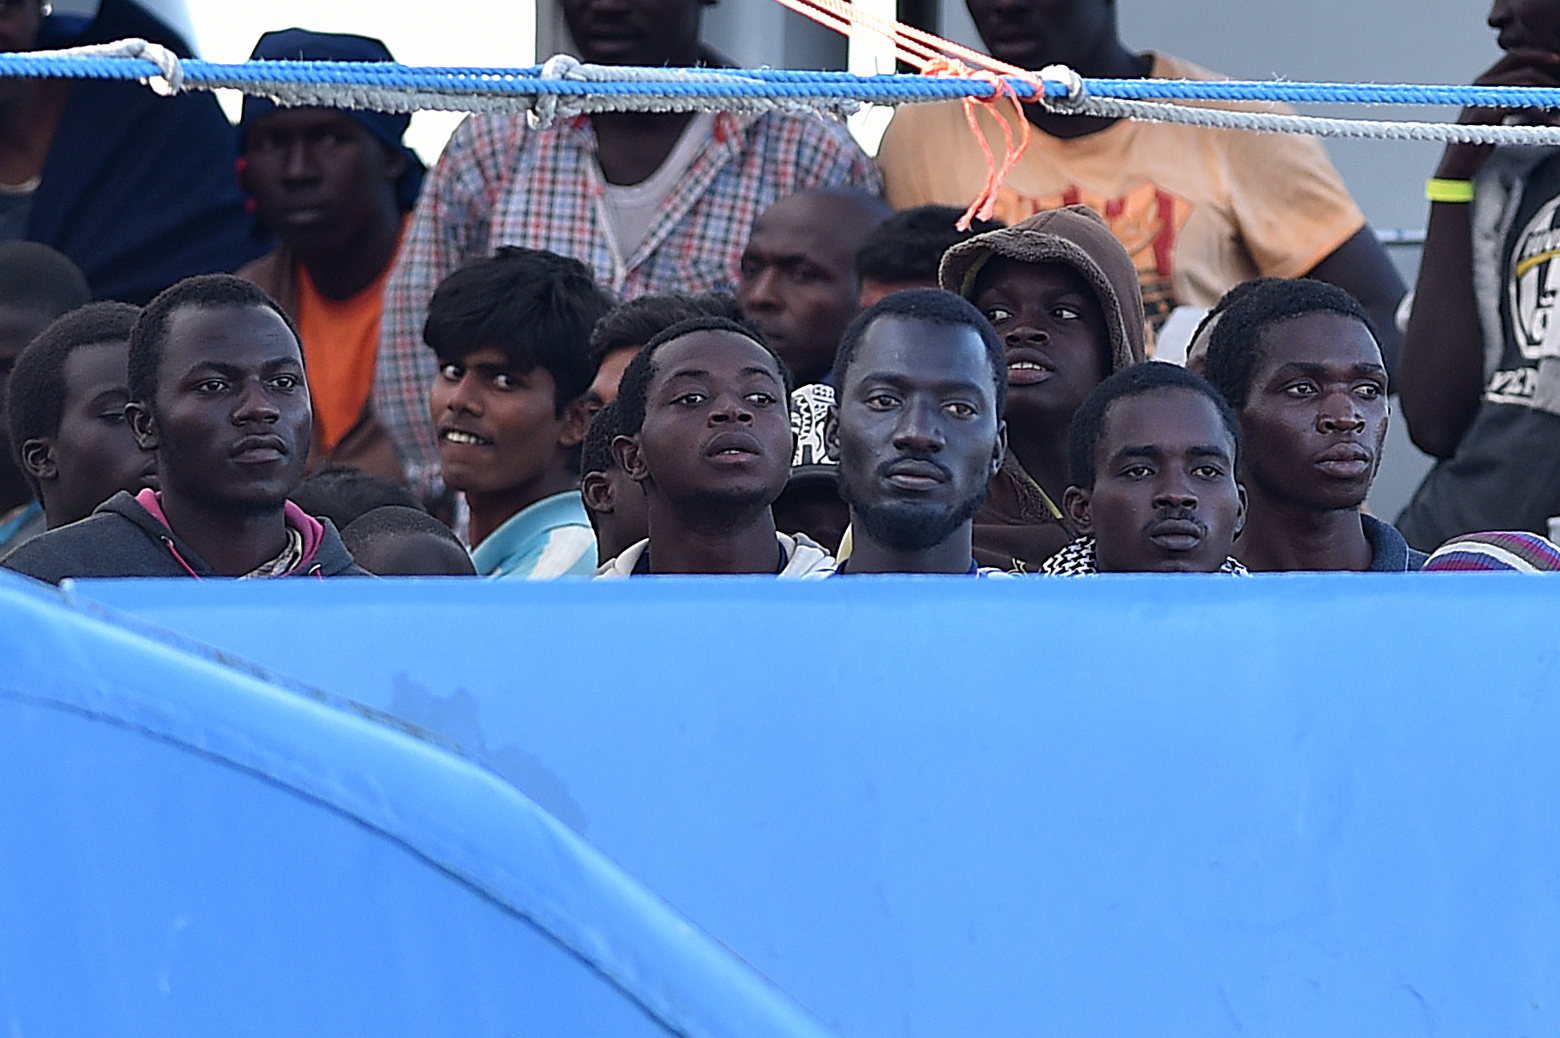 Itália. Guarda Costeira coordena resgate de 2.700 imigrantes no Mediterrâneo